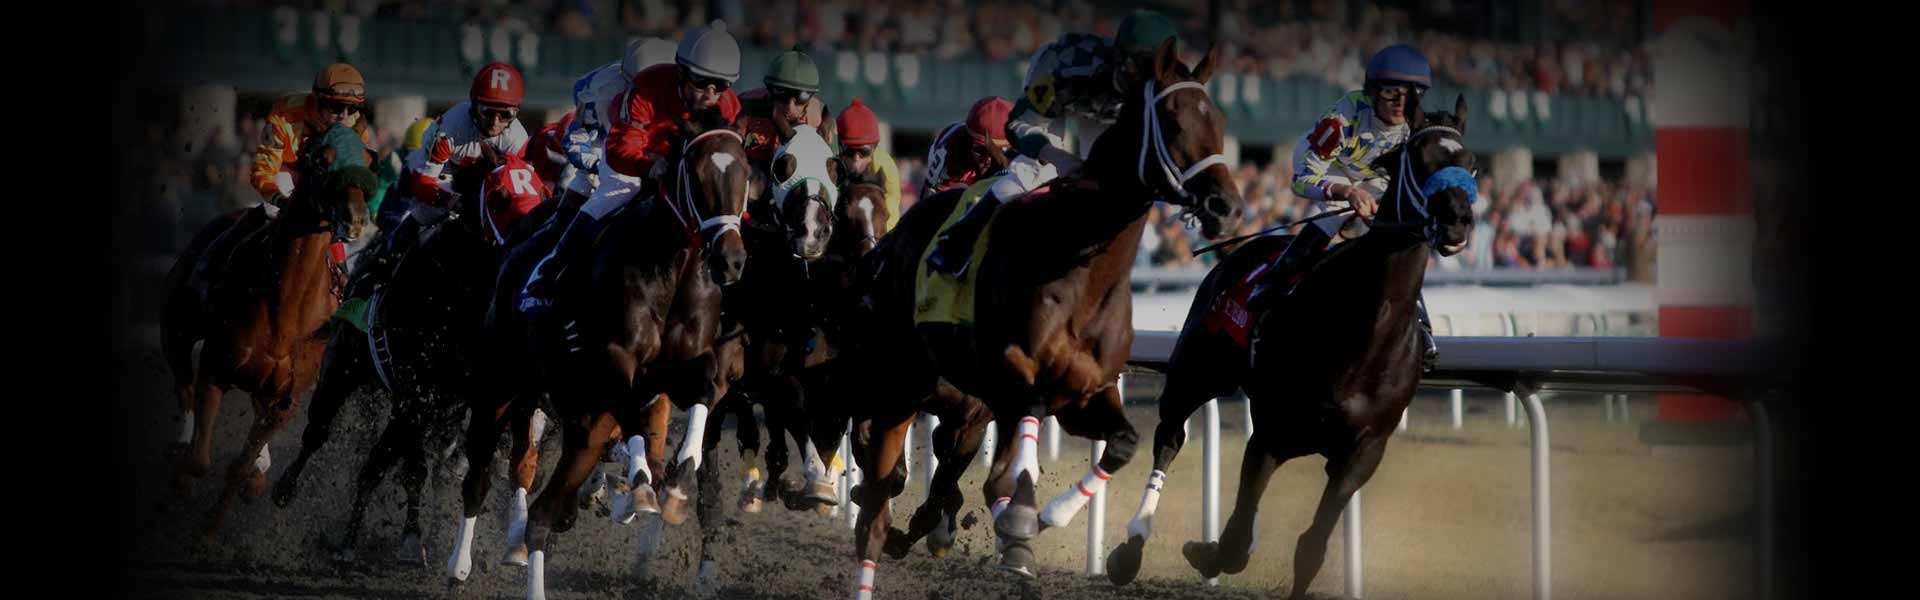 horse-betting-online.jpg